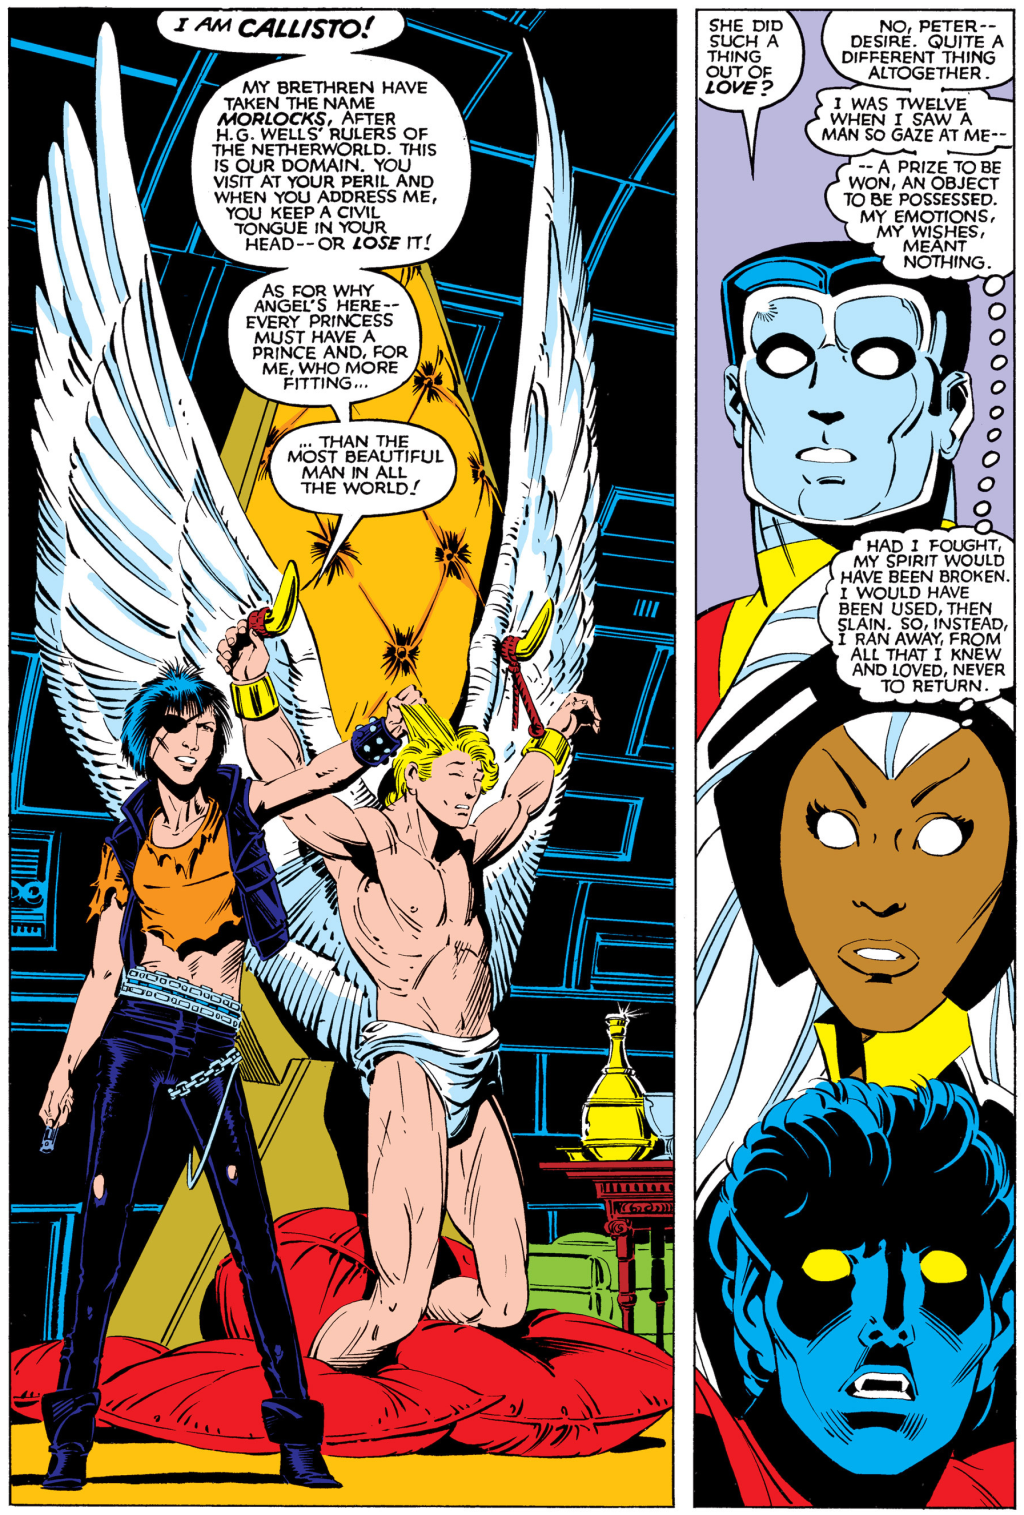 Callisto takes Angel captive in Uncanny X-Men Vol. 1 #169 "Catacombs" (1983), Marvel Comics. WOrds by Chris Claremont, art by Paul Smith, Bob Wiacek, Bob Sharen, and Tom Orzechowski.